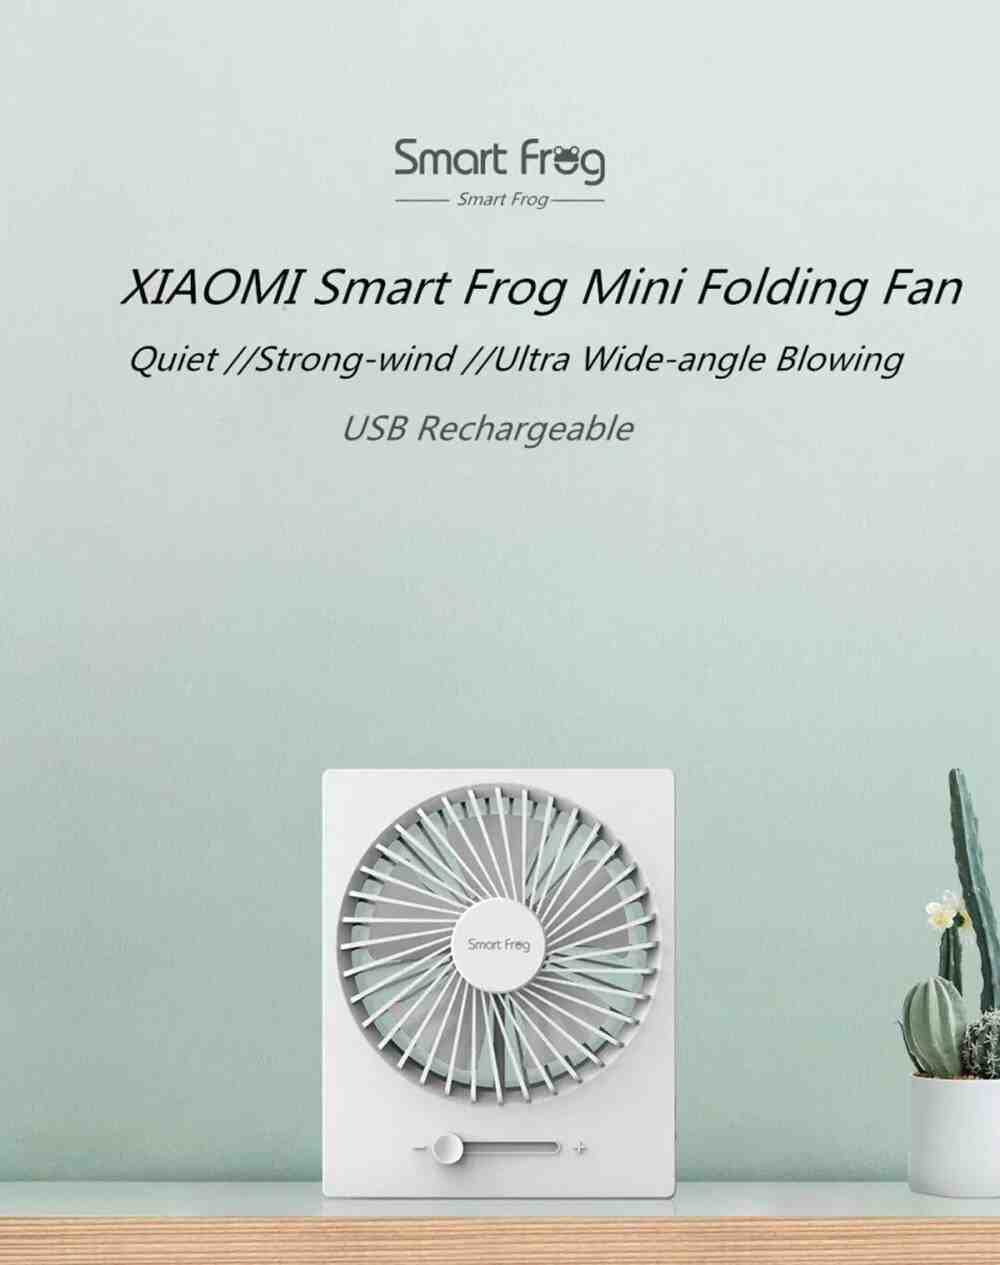 Xiaomi Smartfrog Foldable Mini Fan review